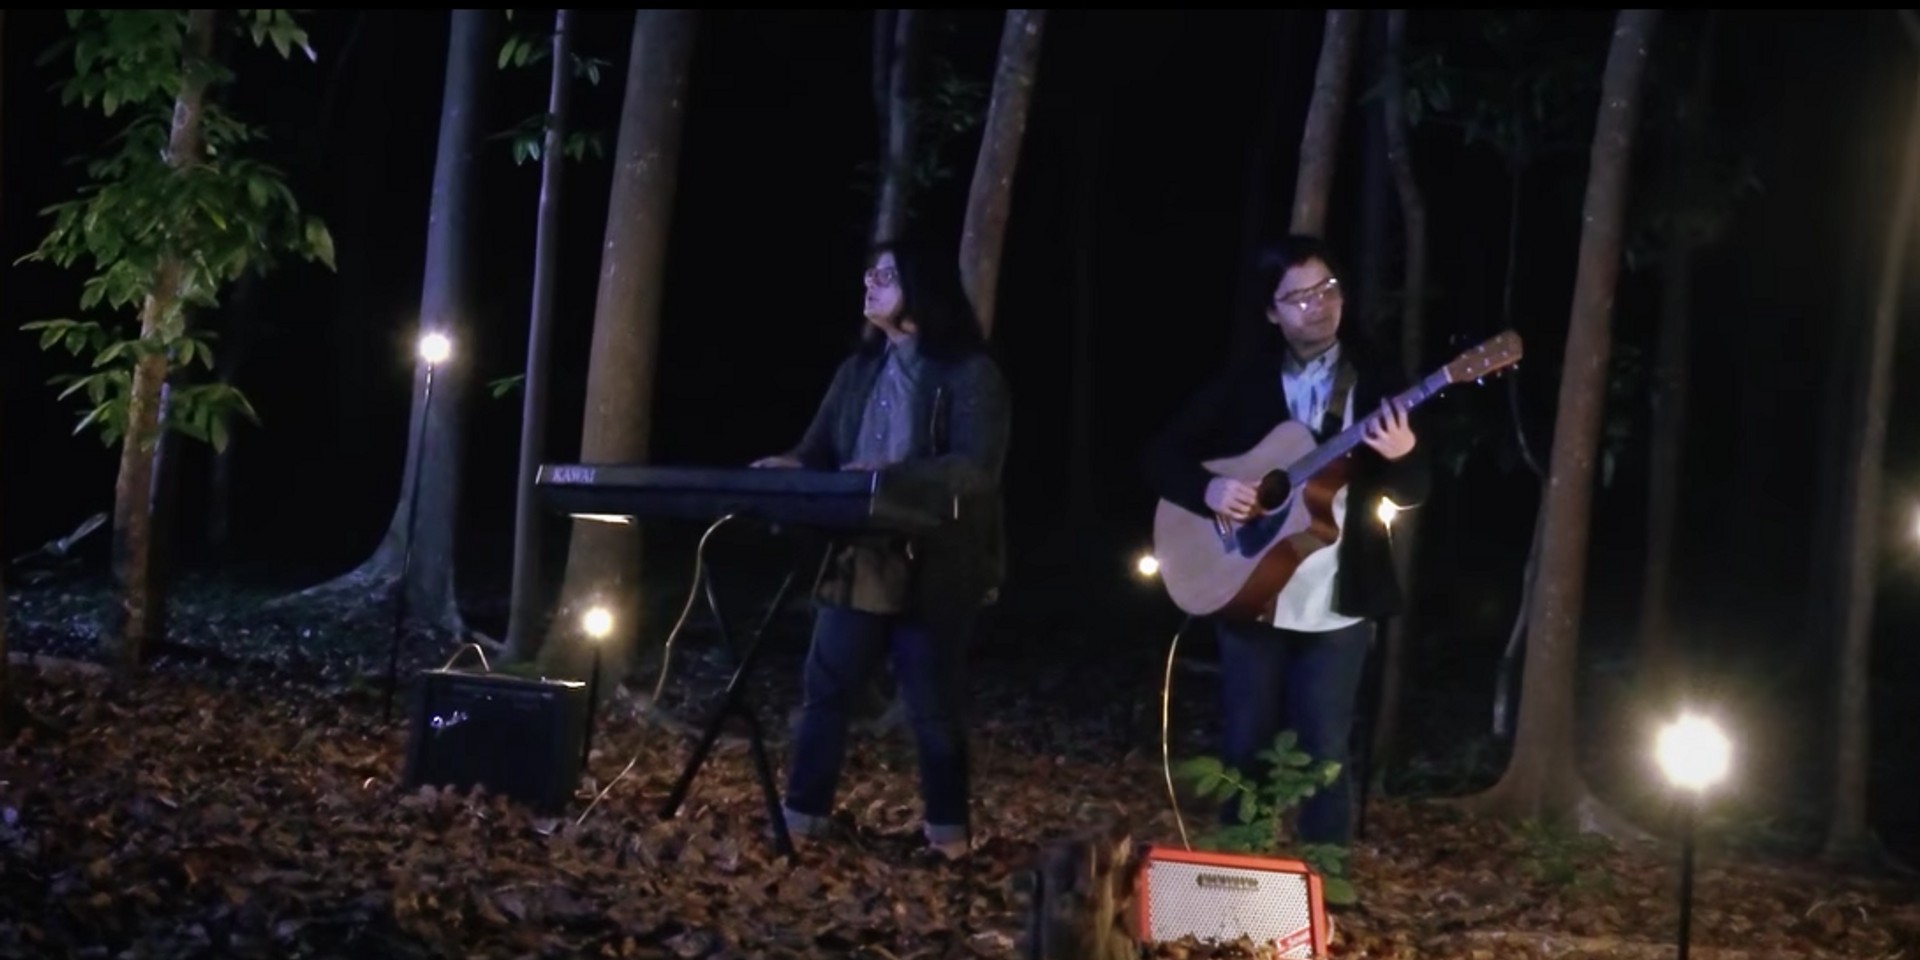 Ben&Ben release poignant music video for "Leaves"